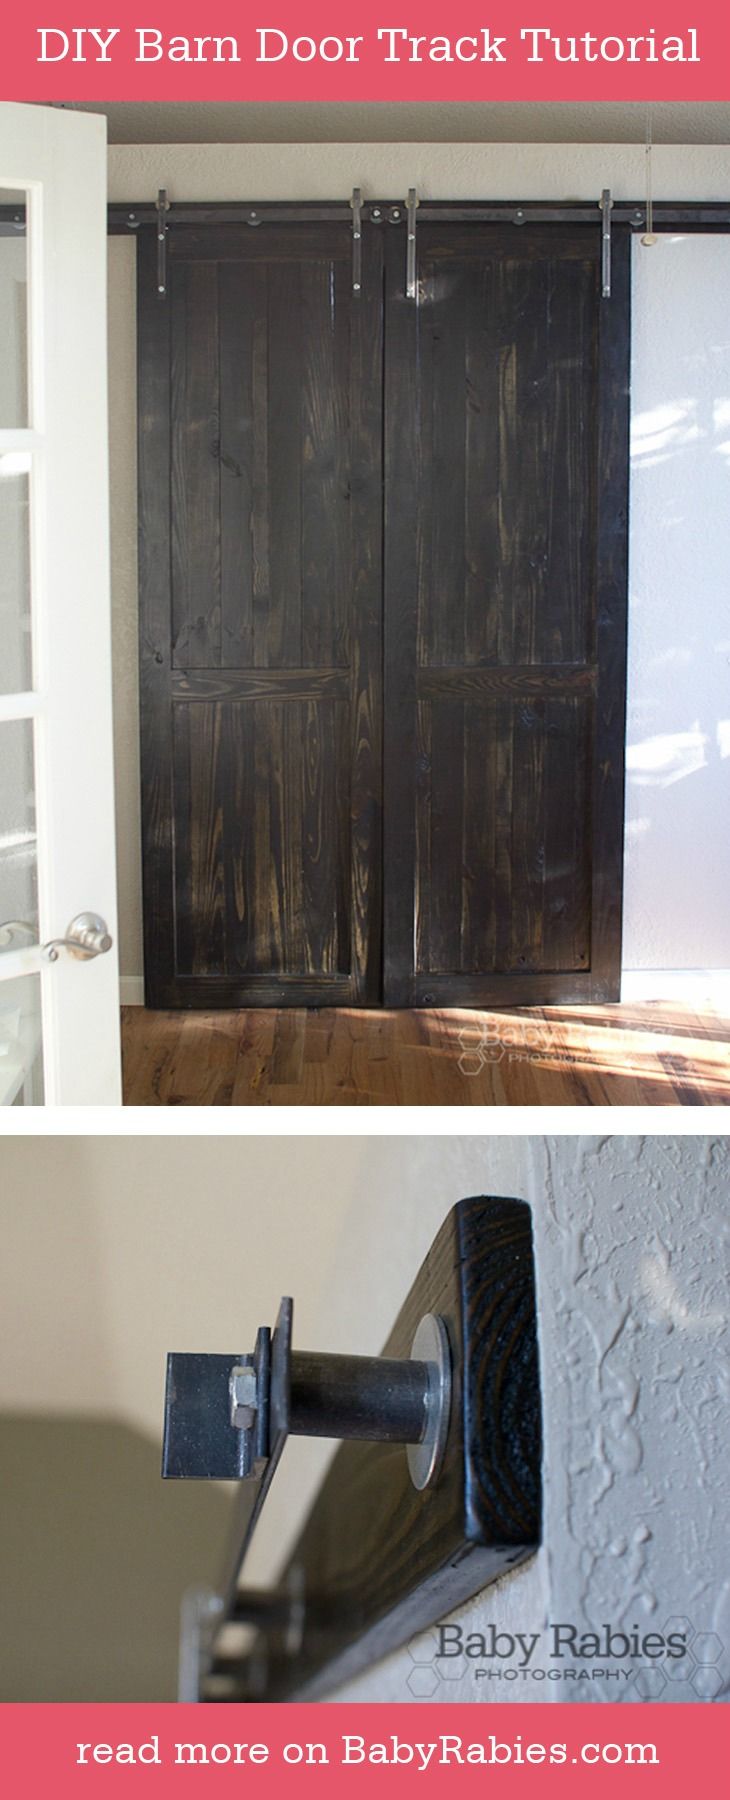 DIY Barn Door Track Tutorial #DIY #Decorating #HomeDecor